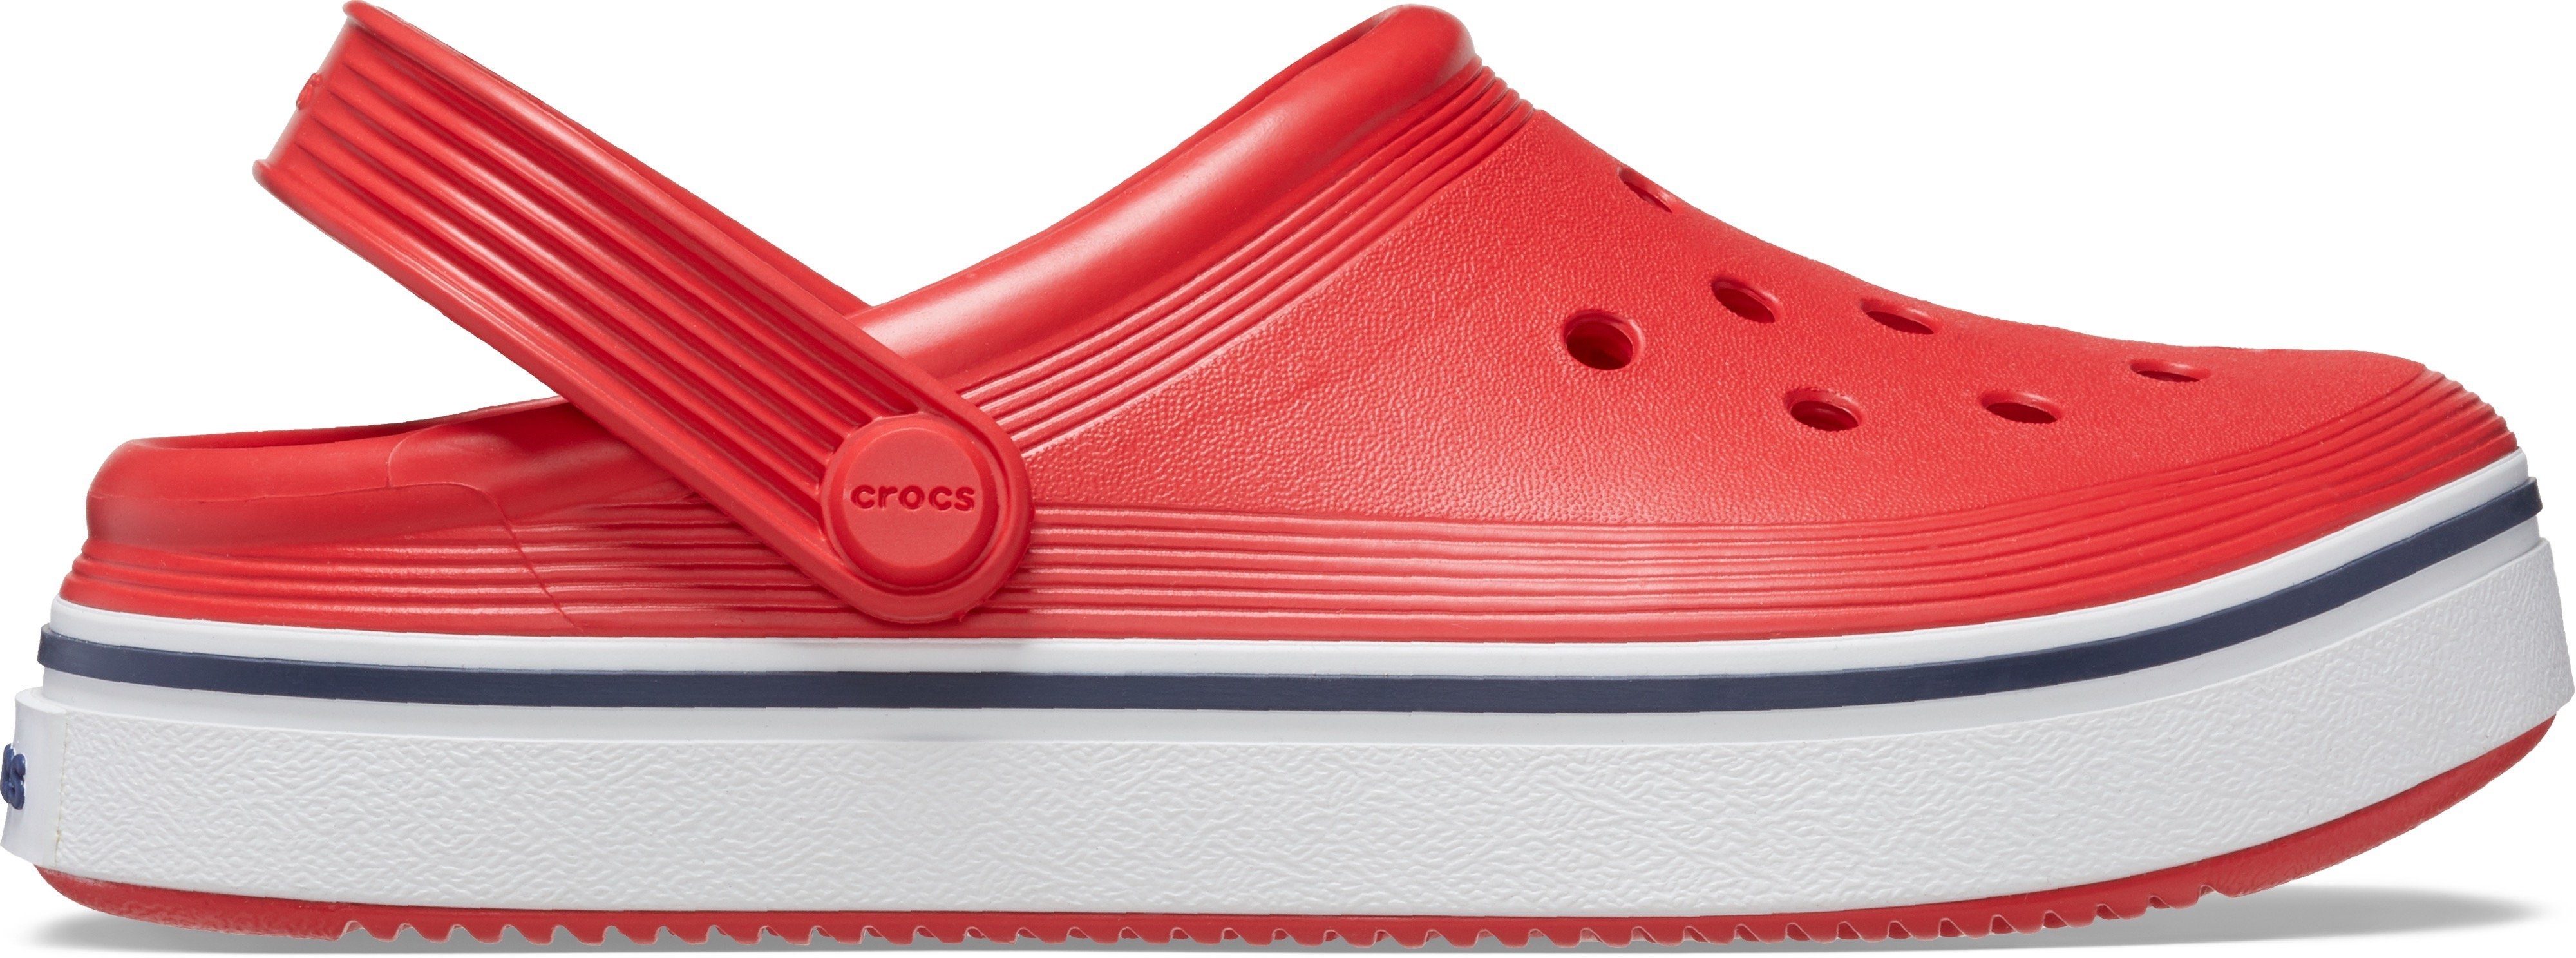 rot K Crocs Clog mit Clean Crocband Clog Farbeinsatz coolem